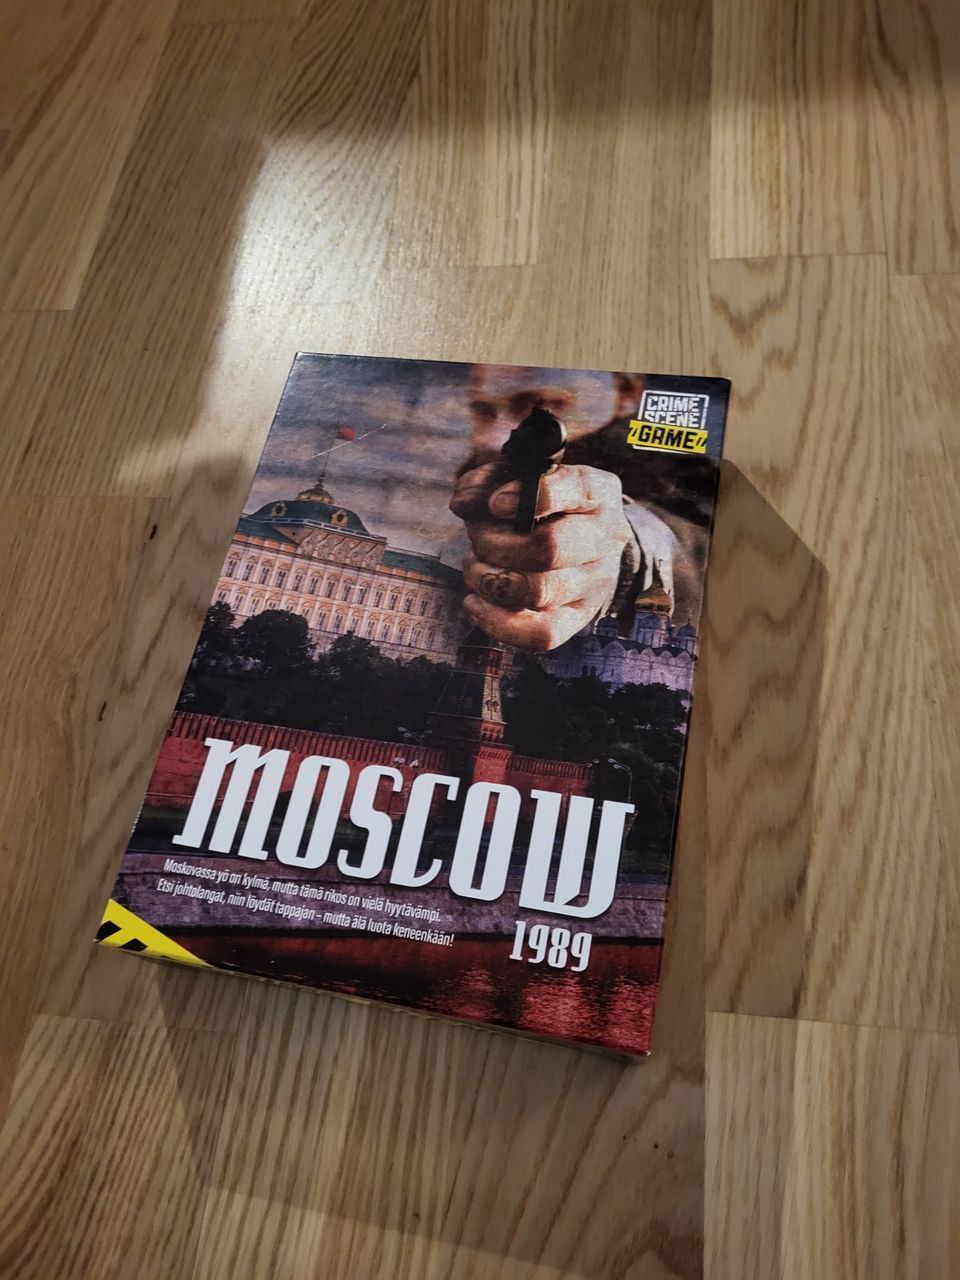 Moscow 1989 crime scene game lautapeli pakohuone